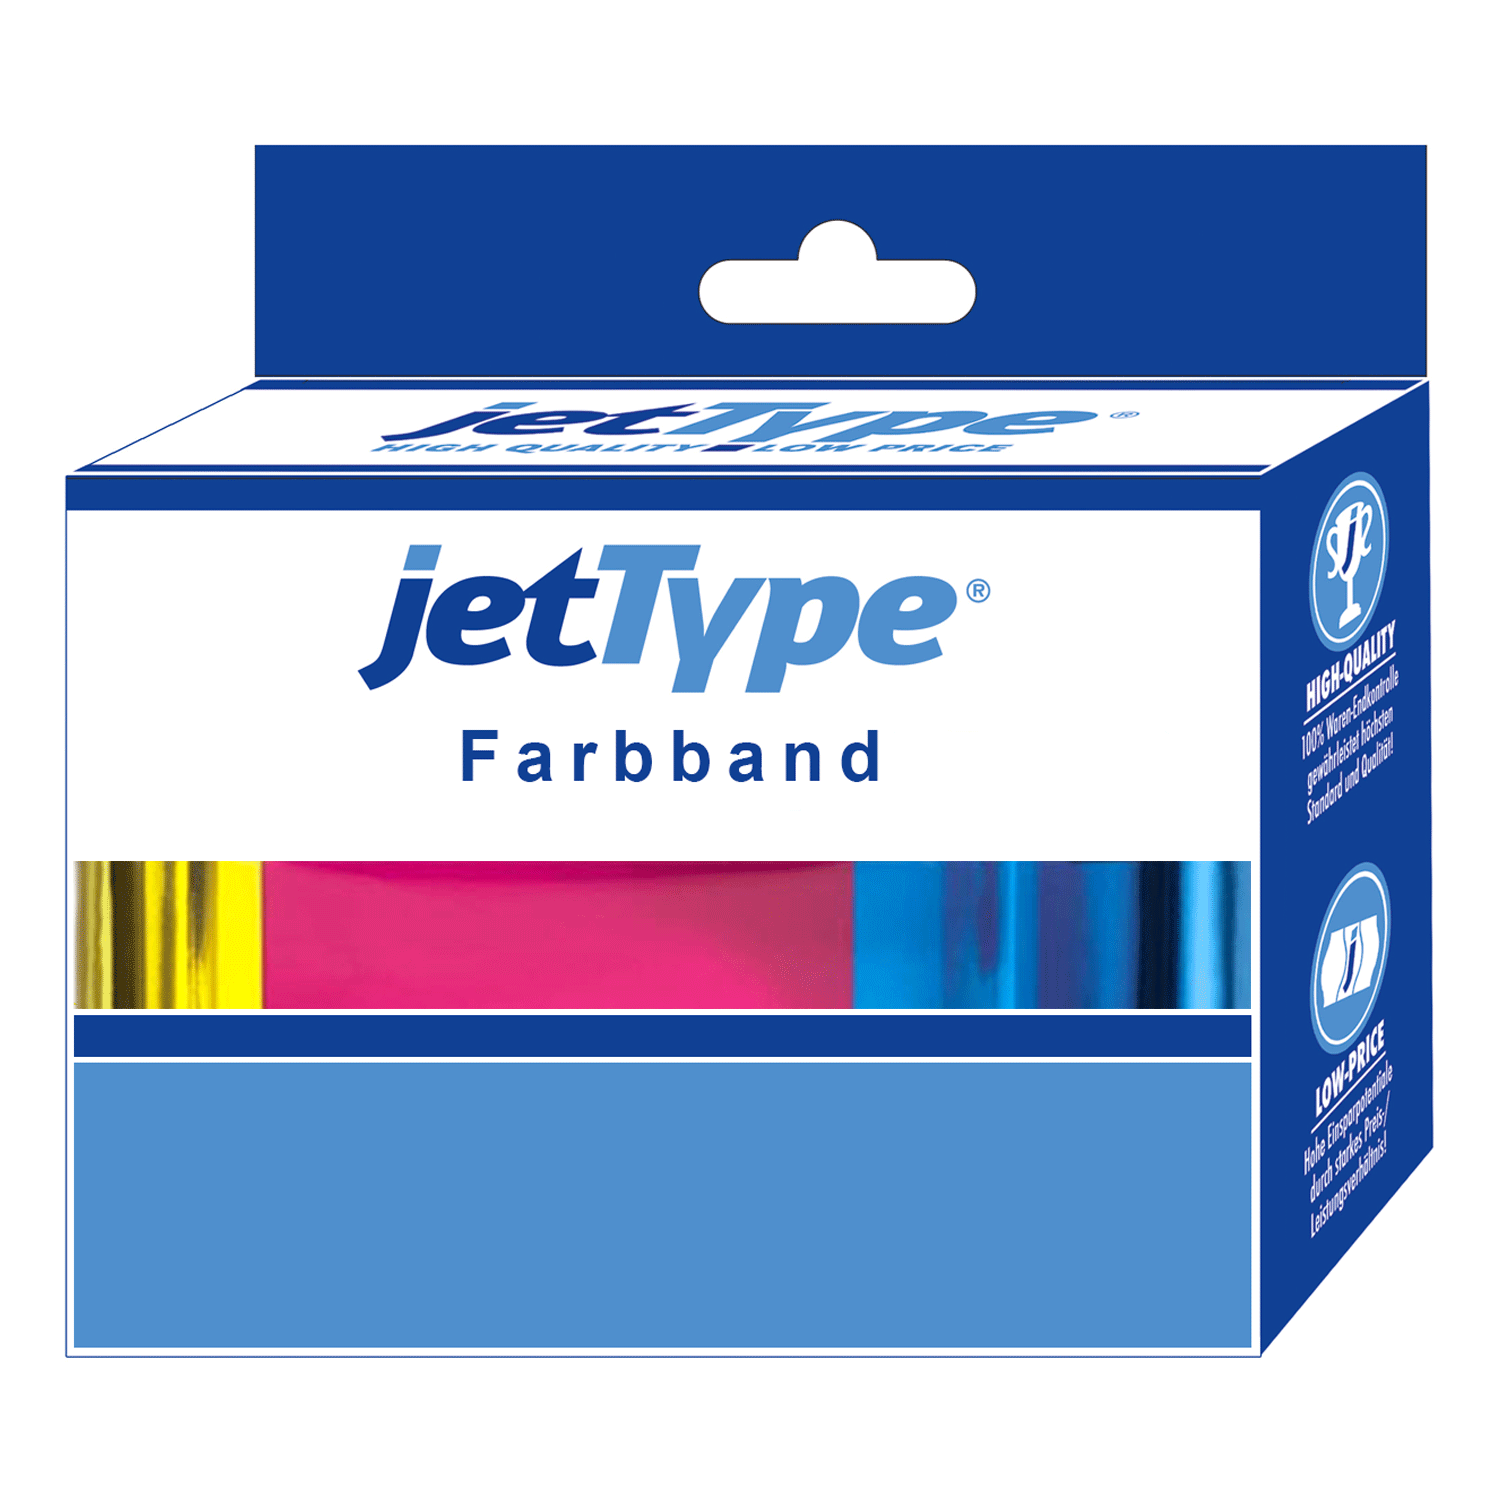 jetType Farbband kompatibel zu Epson C13S015262 Nylon schwarz Gr. 639N/642/651 13mm x 14m